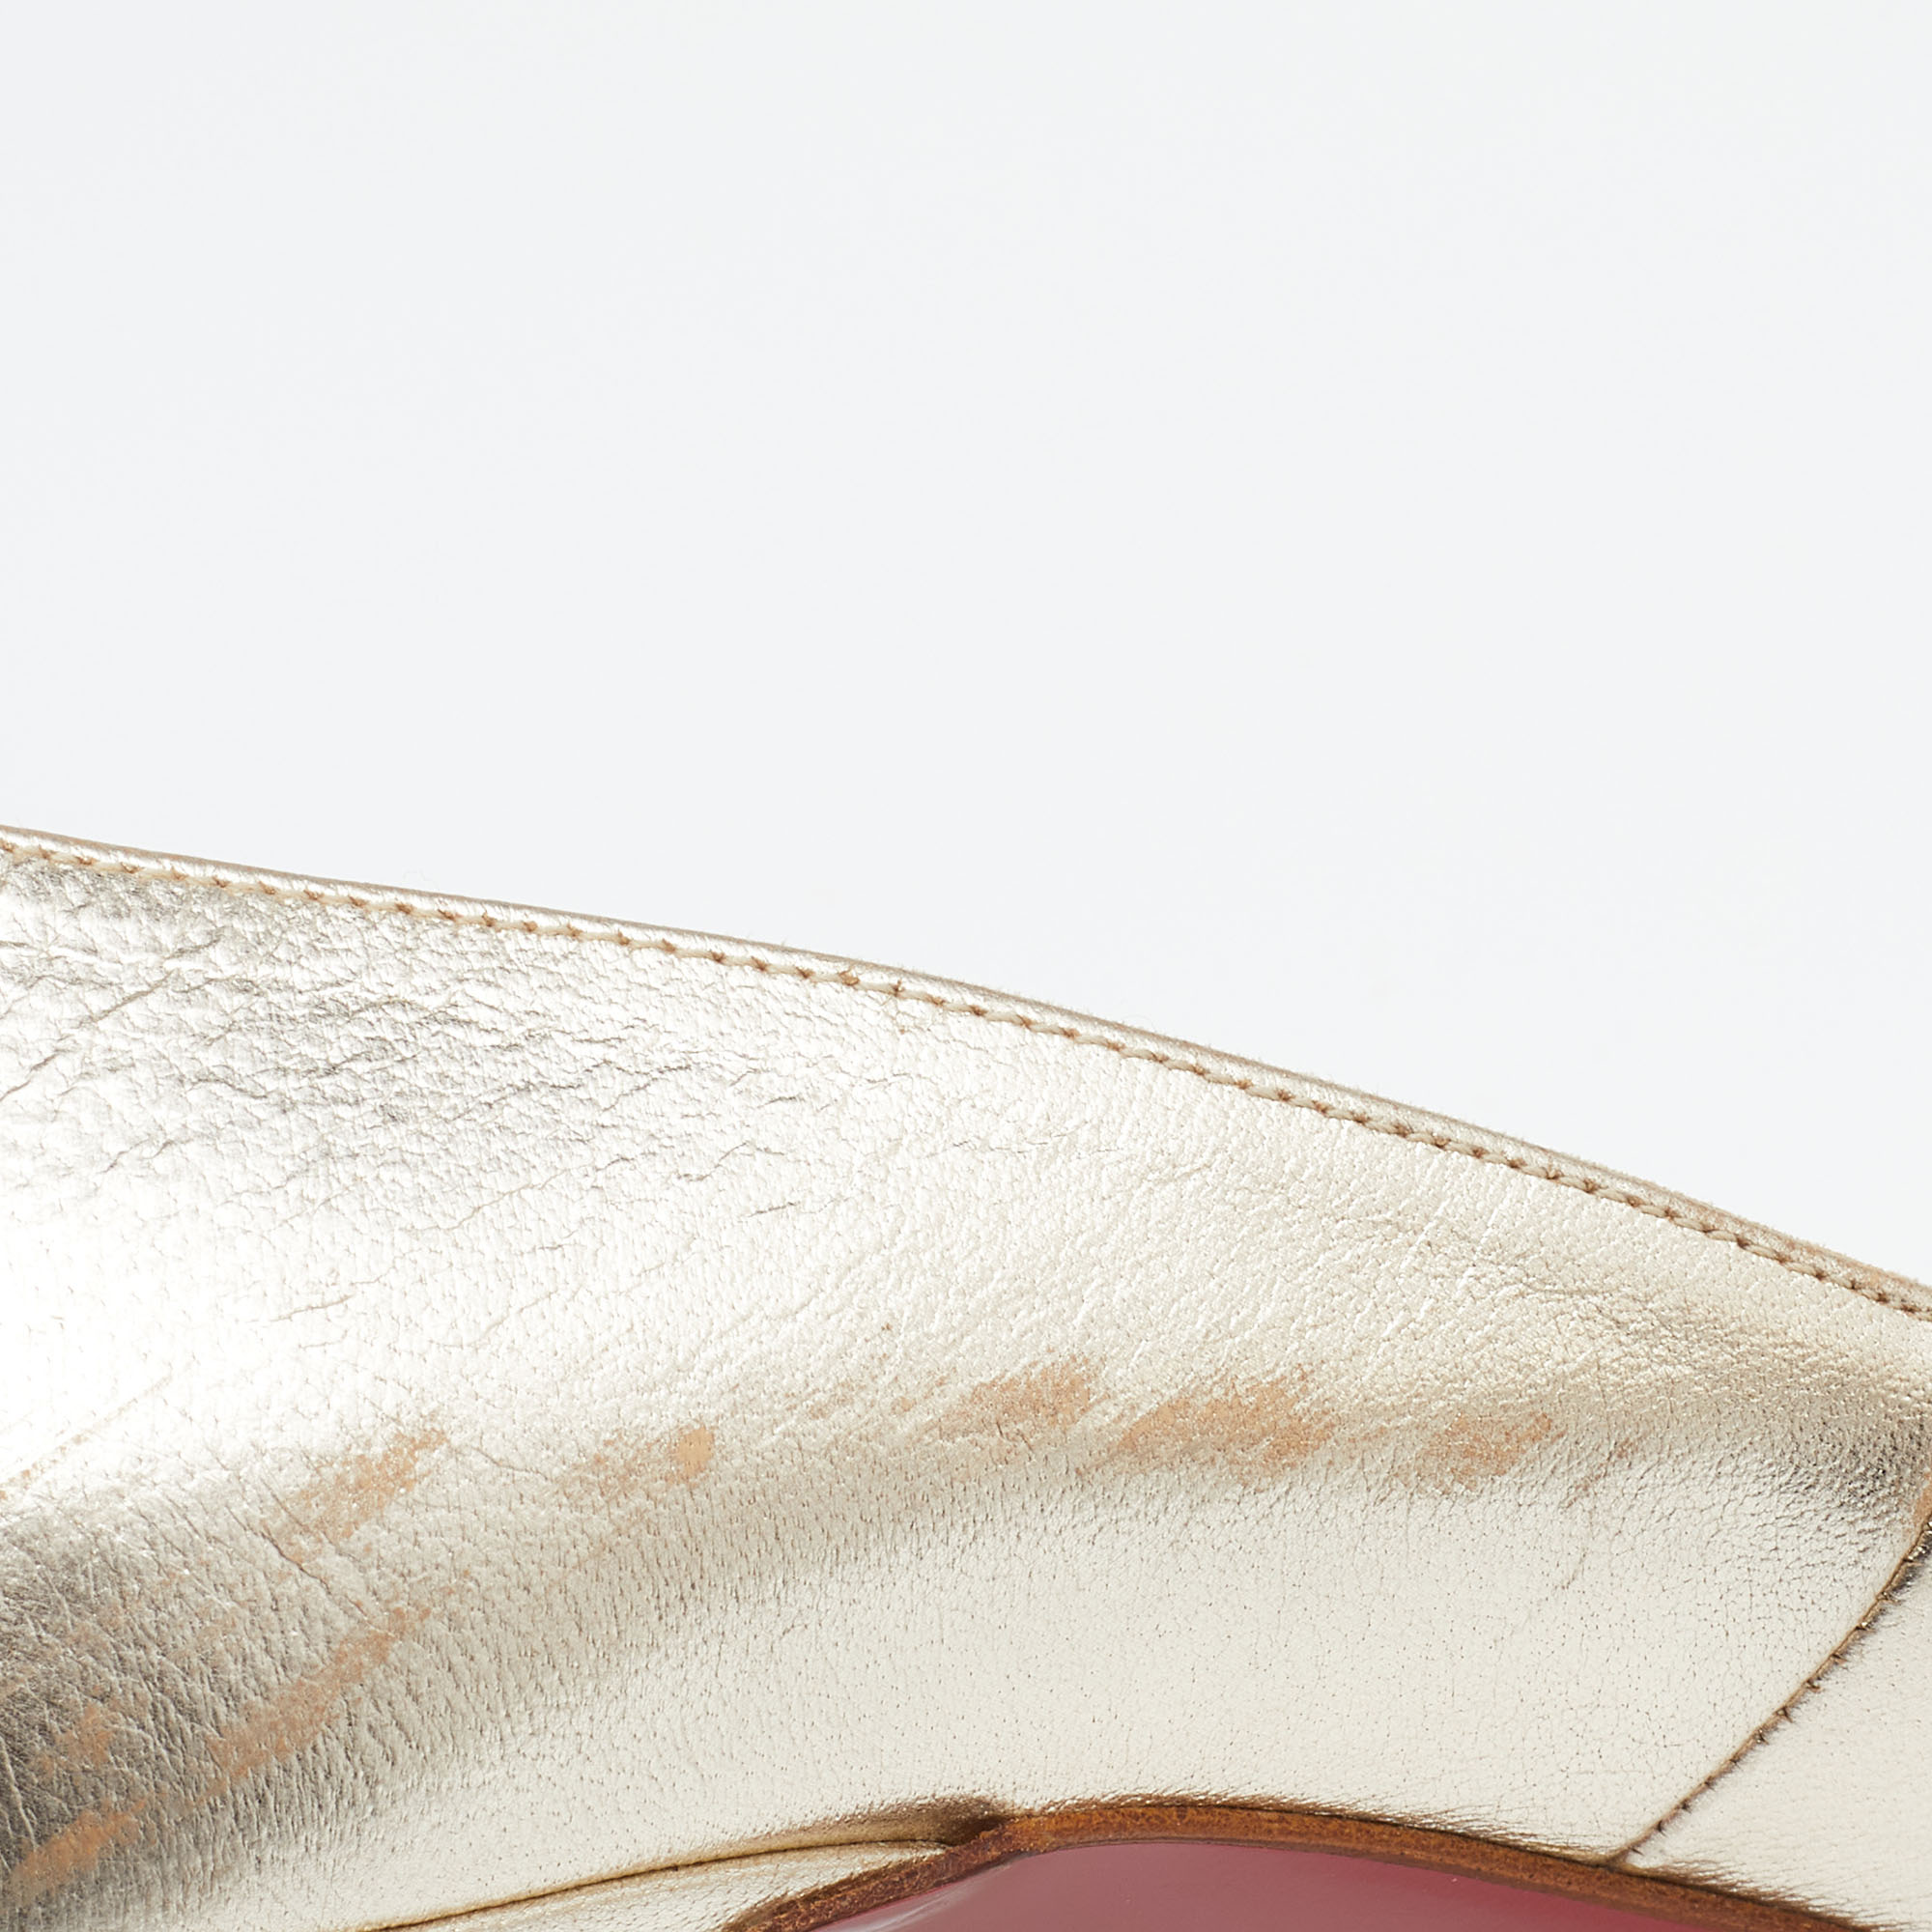 Christian Louboutin Metallic Gold Leather Peep Toe Pumps Size 38